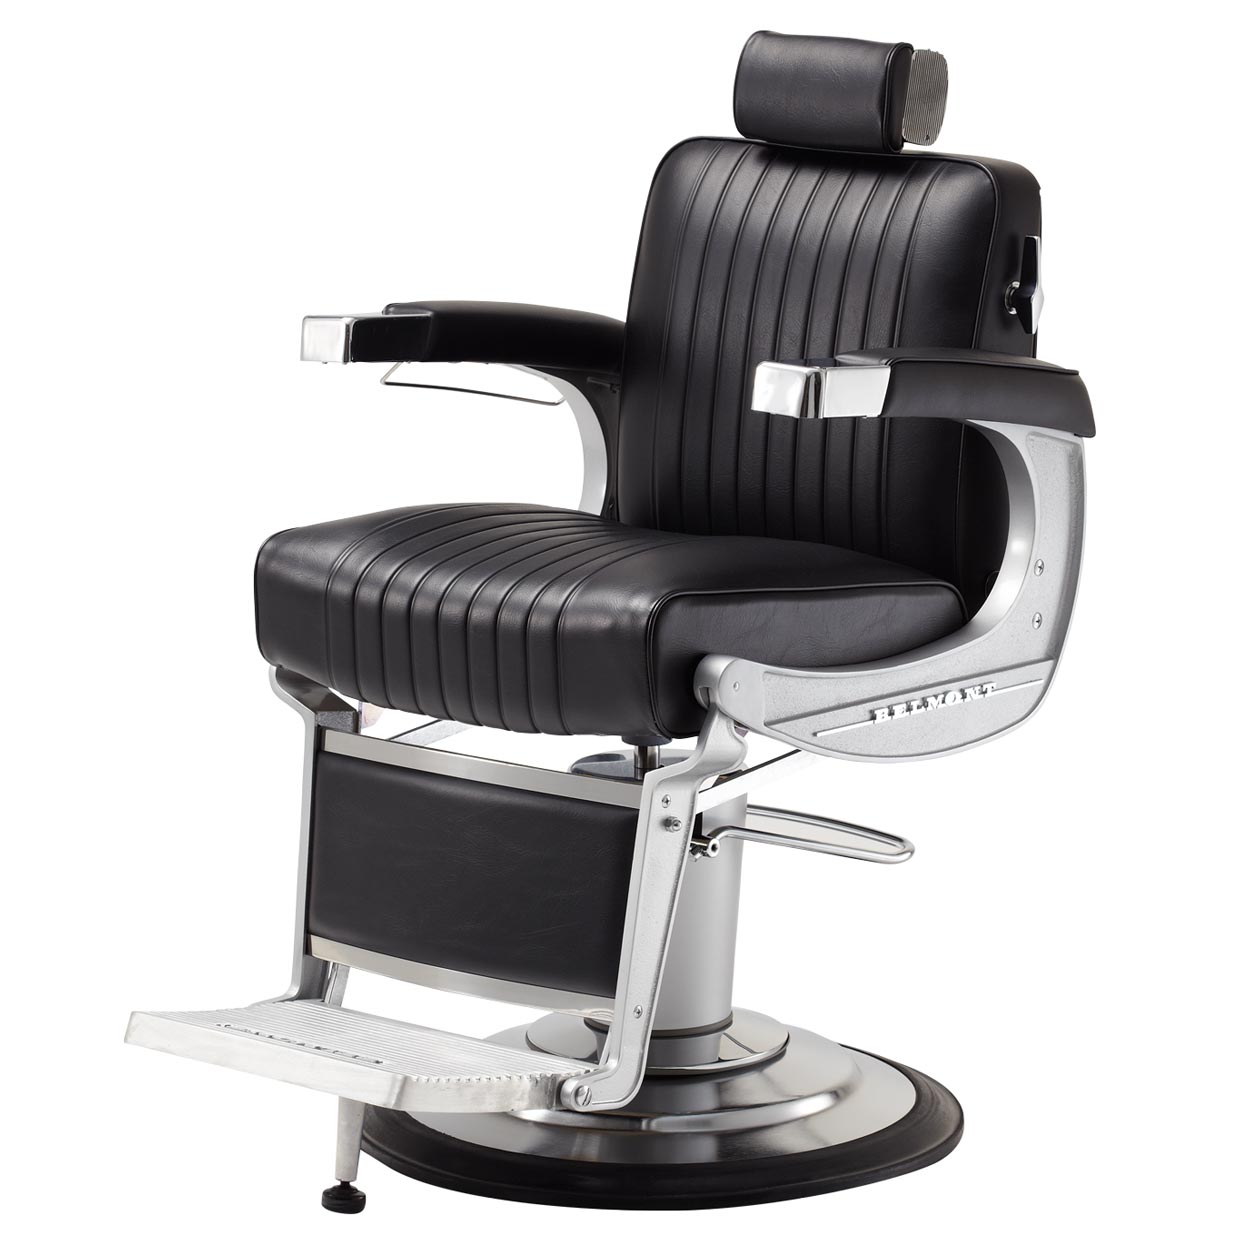 takara-belmont-barber-chair-elegance-225-classic.jpg